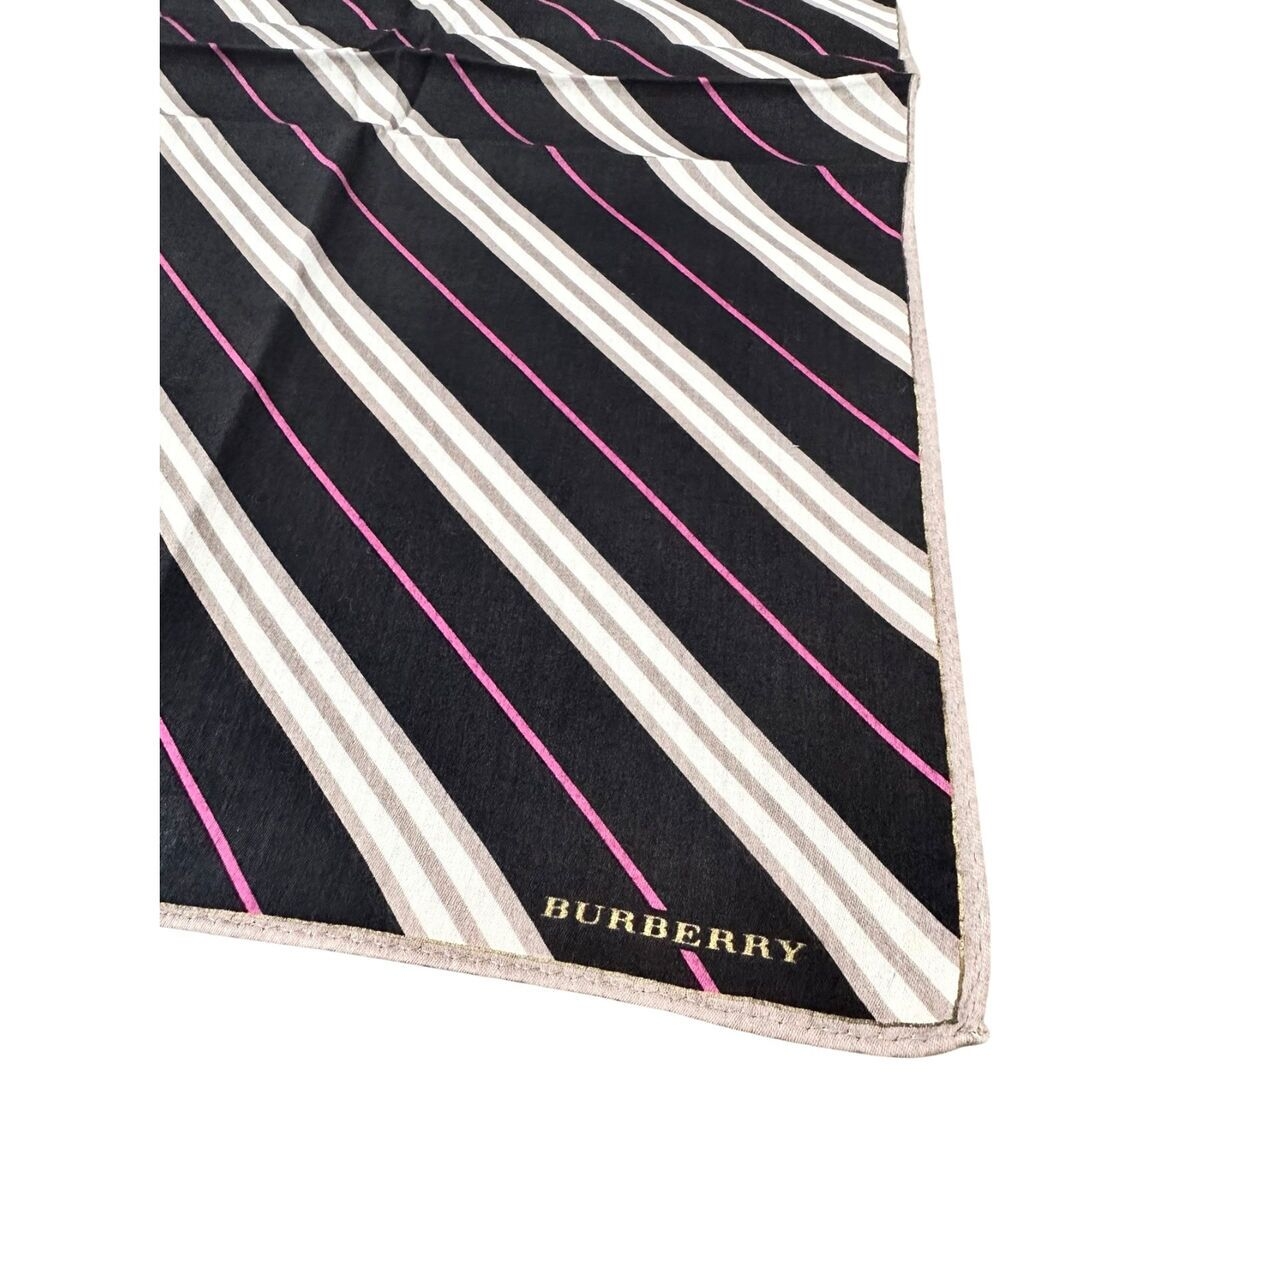 Burberry Multicolour Stripe Print Scarf